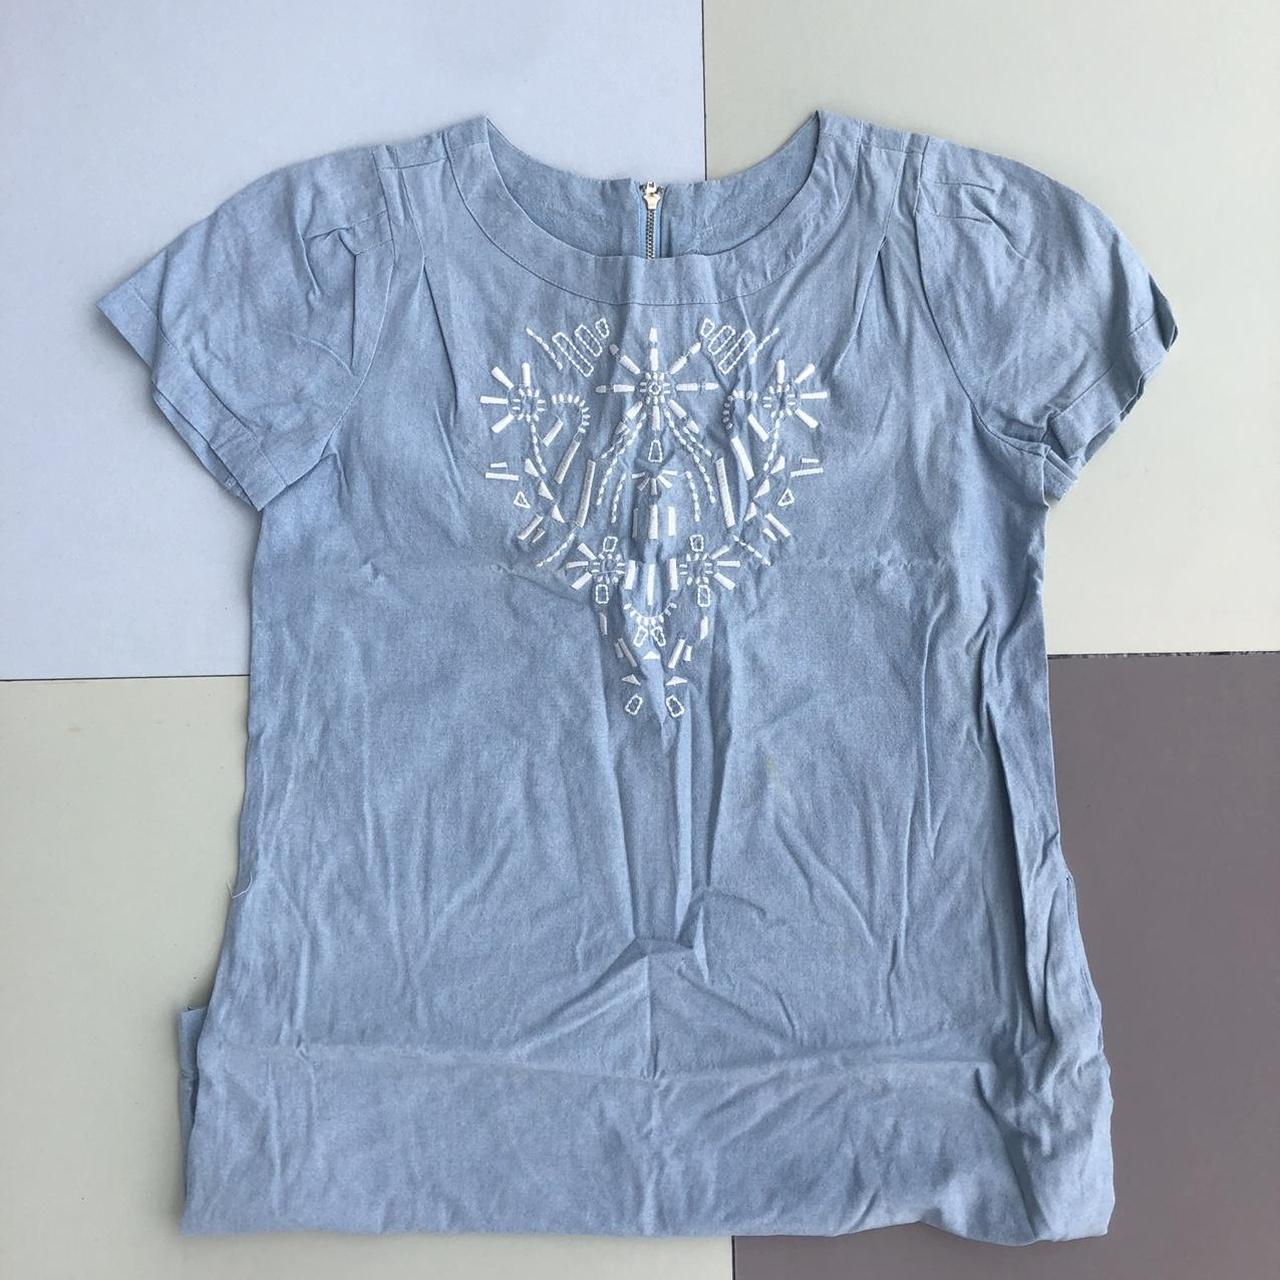 Isabel Marant Women's Blue and White T-shirt